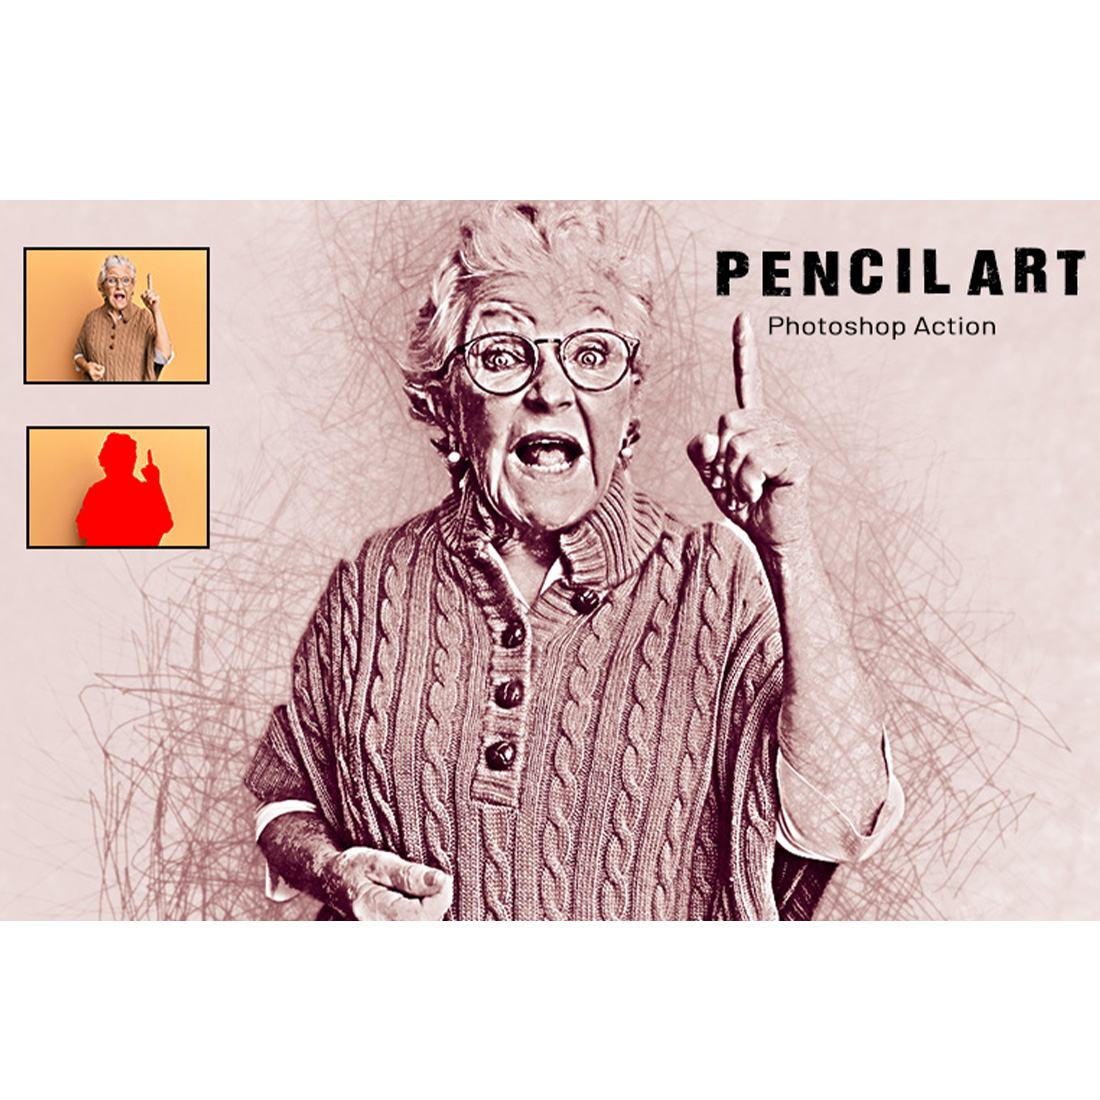 Pencil Art Photoshop Action cover image.